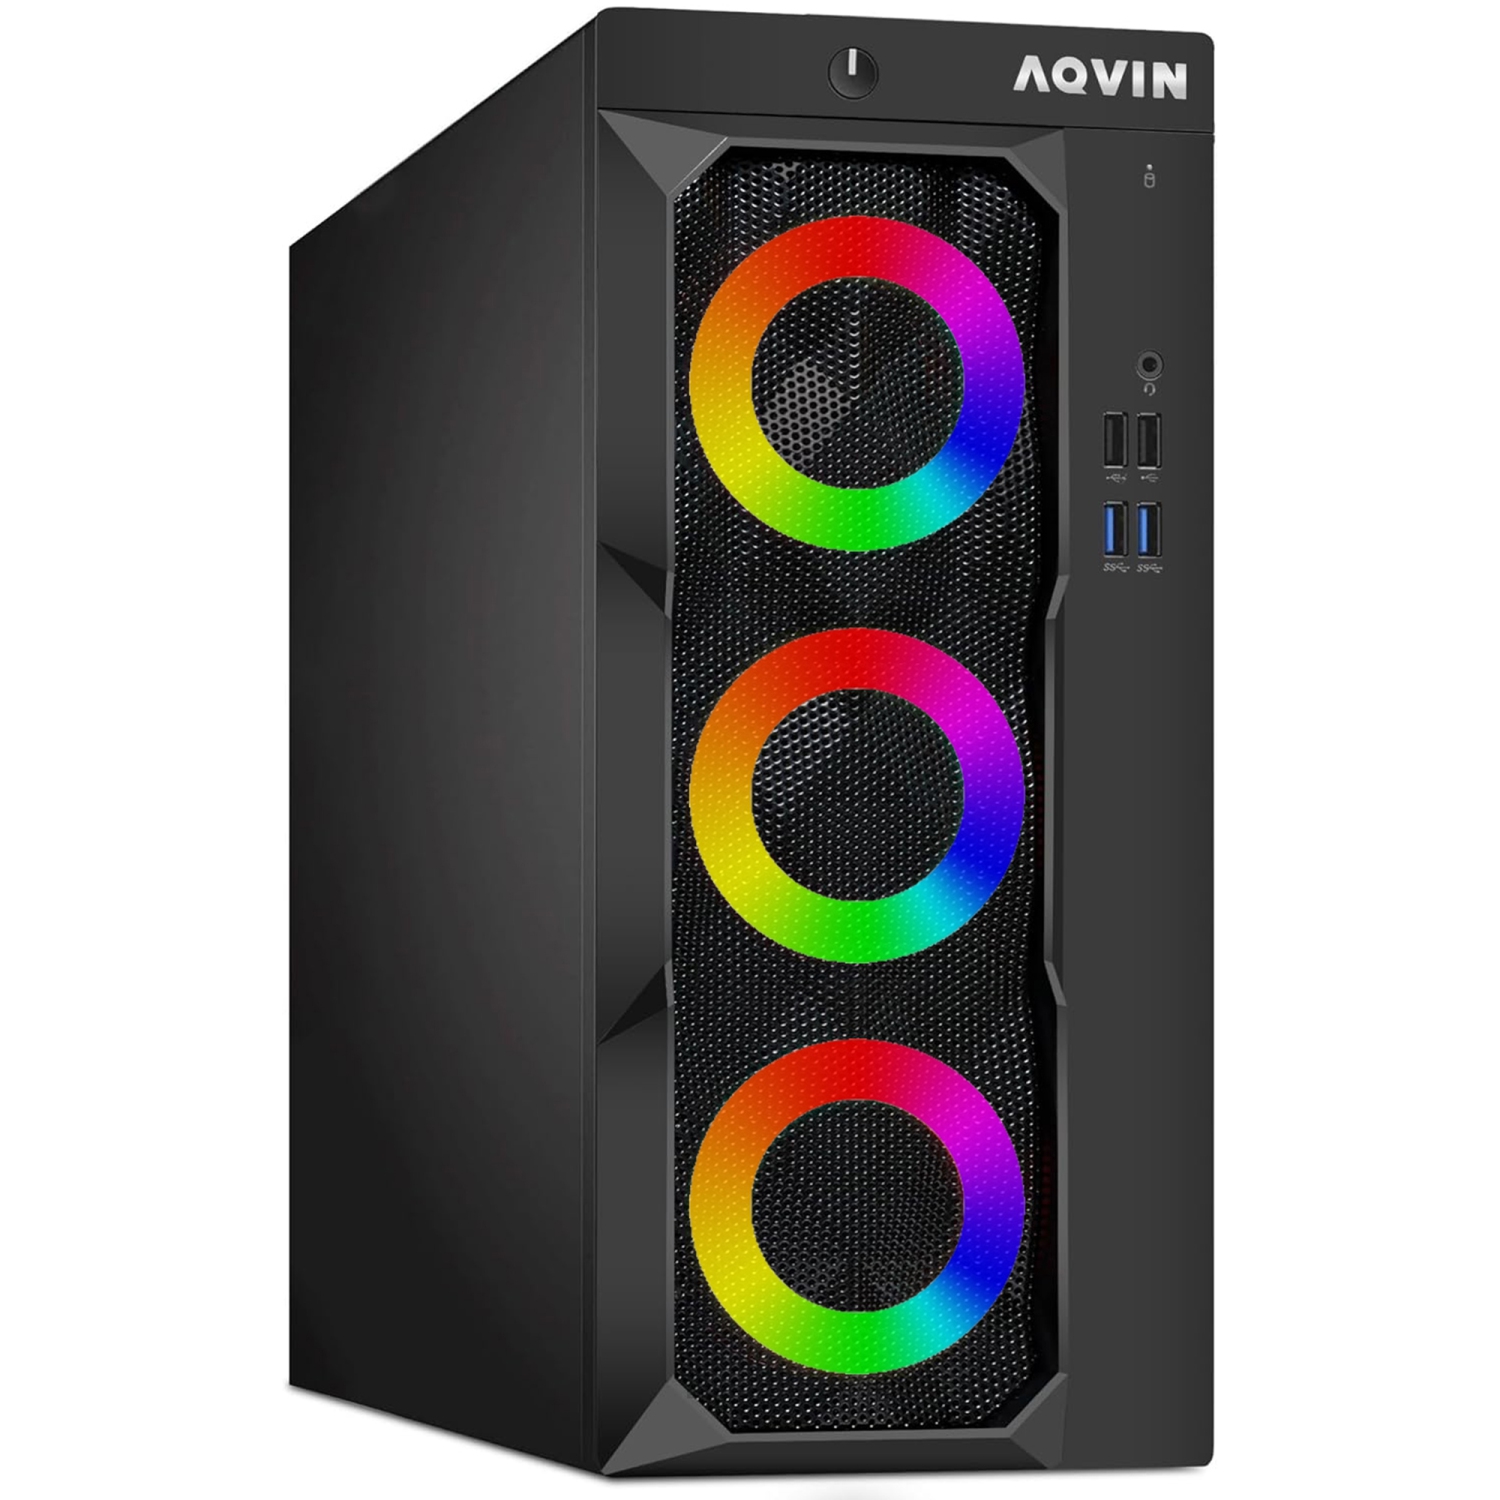 Refurbished (Excellent) - AQVIN Prebuilt LuminaRings RGB Gaming PC Desktop GeForce GTX 1630 4GB DDR6 Intel Core i7 Processor upto 4.0Ghz 32GB DDR4 RAM 1TB SSD Windows 10 Pro WIFI